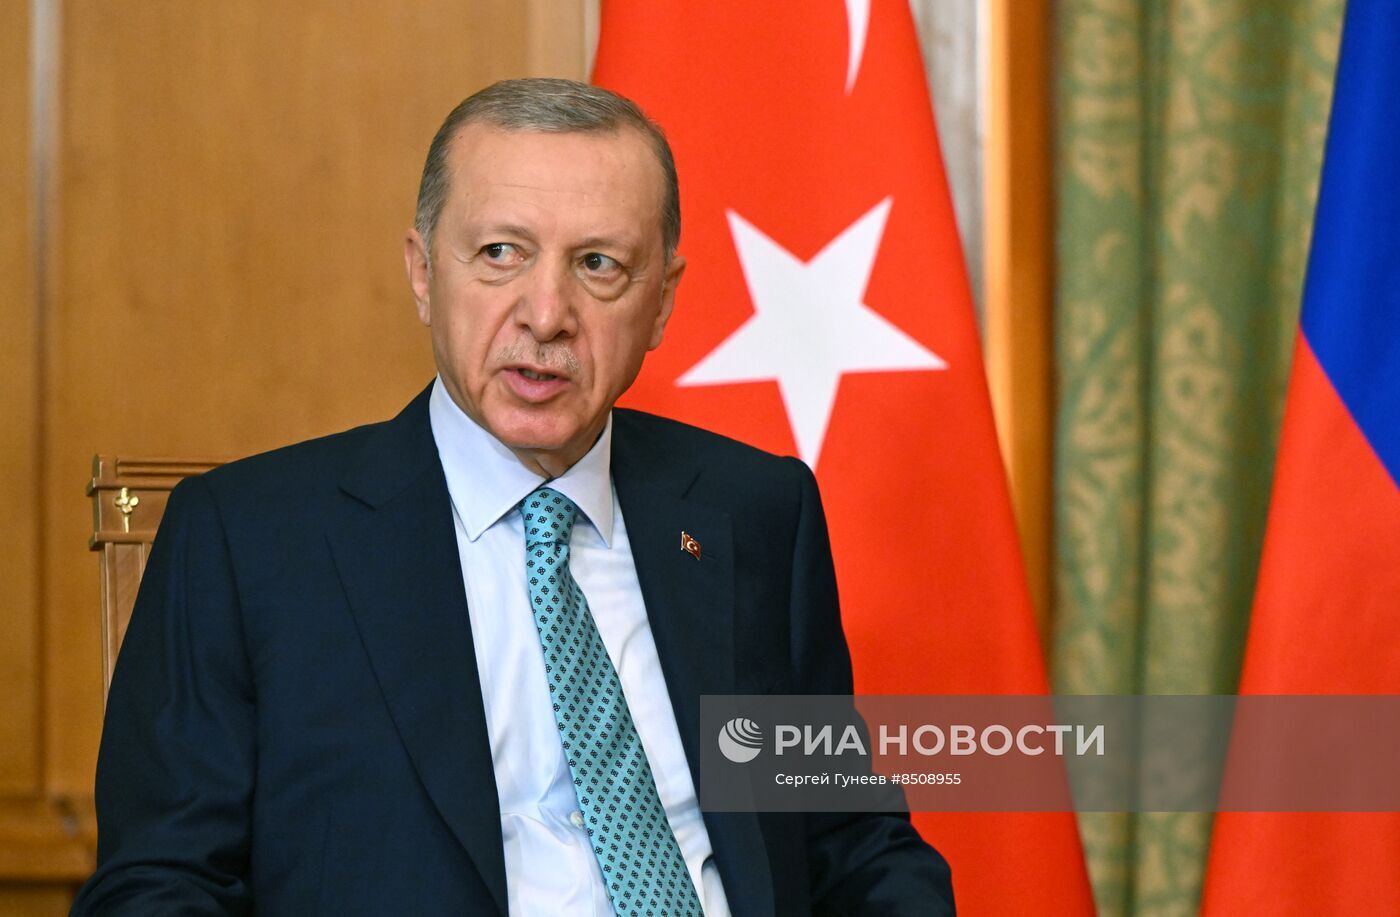 أردوغان يبلغ زيلينسكي استعداد أنقرة للوساطة واحتضان مفاوضات سلام بين موسكو وكييف